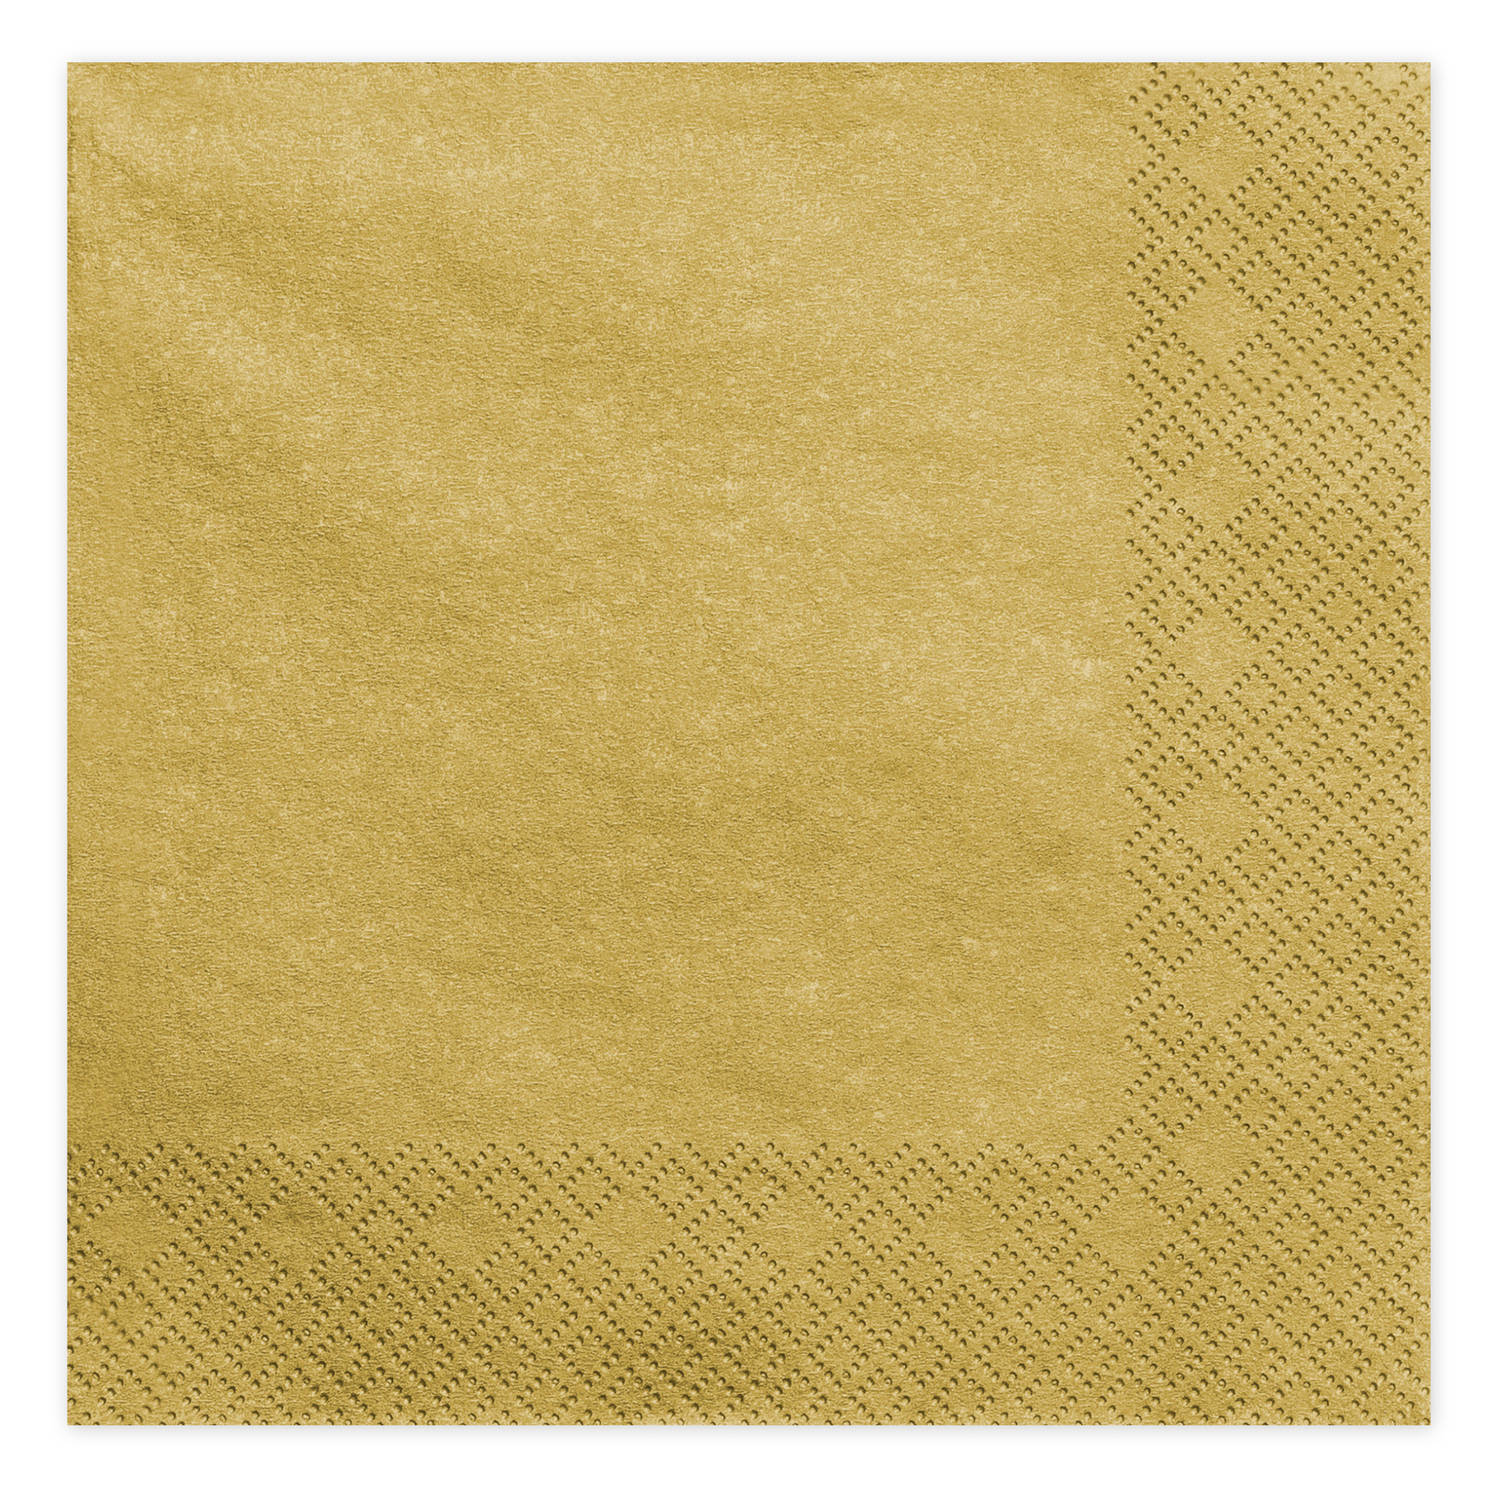 40x Papieren tafel servetten goud gekleurd 40 x 40 cm - Feestservetten